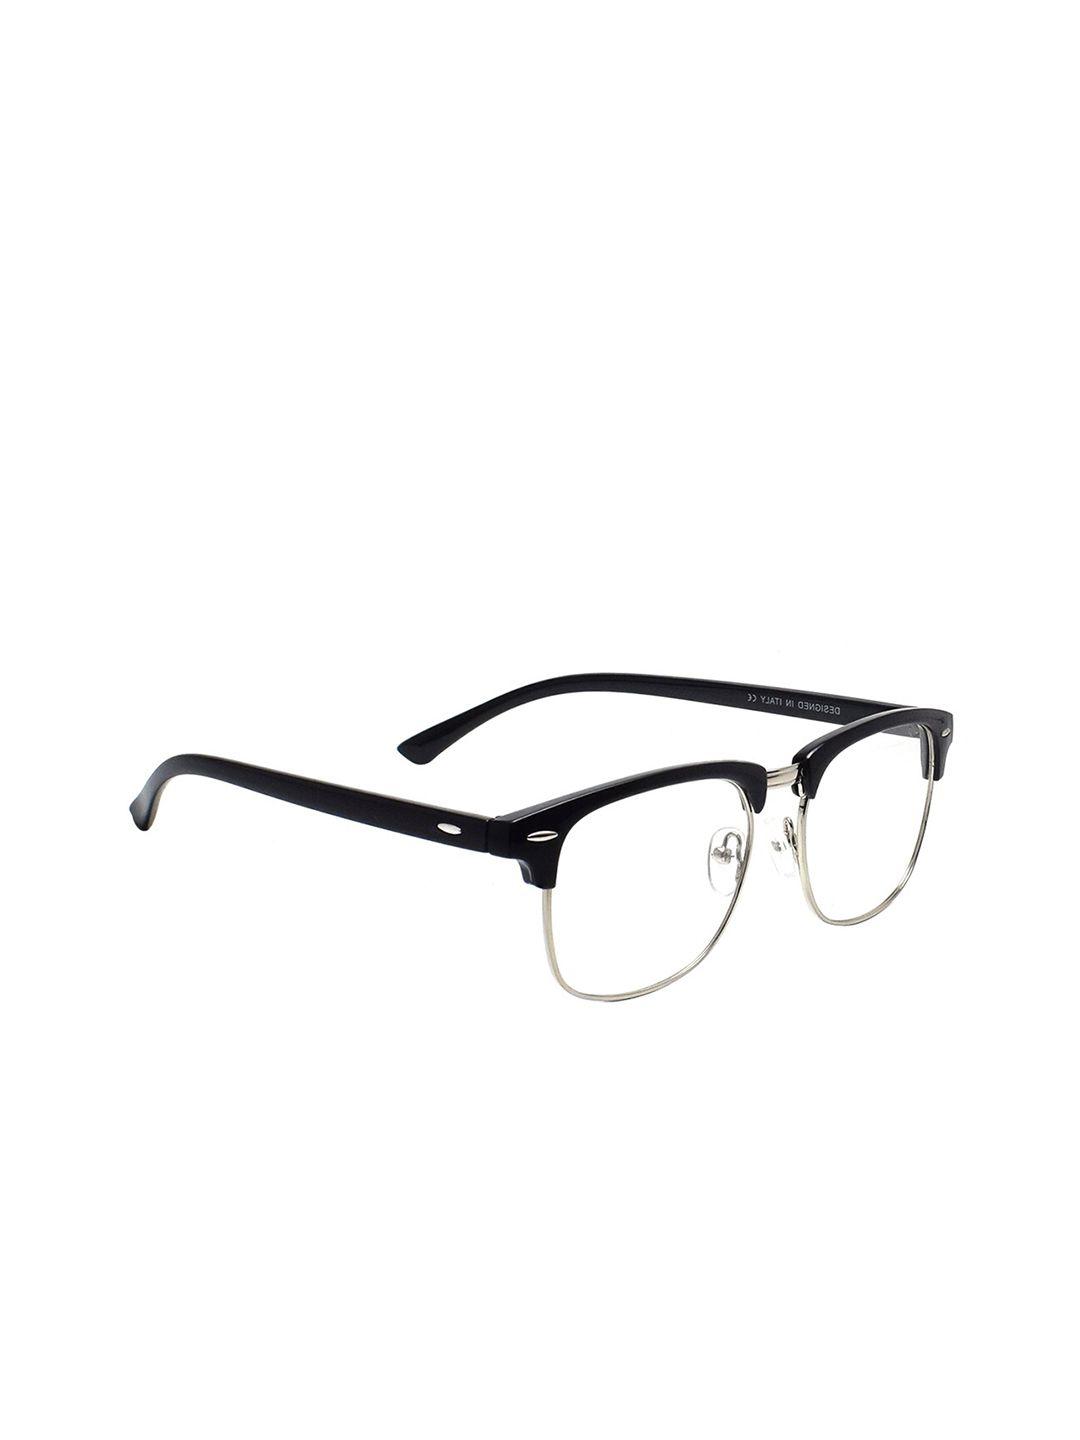 peter-jones-eyewear-unisex-black-half-rim-computer-glasses-square-frames-2092b